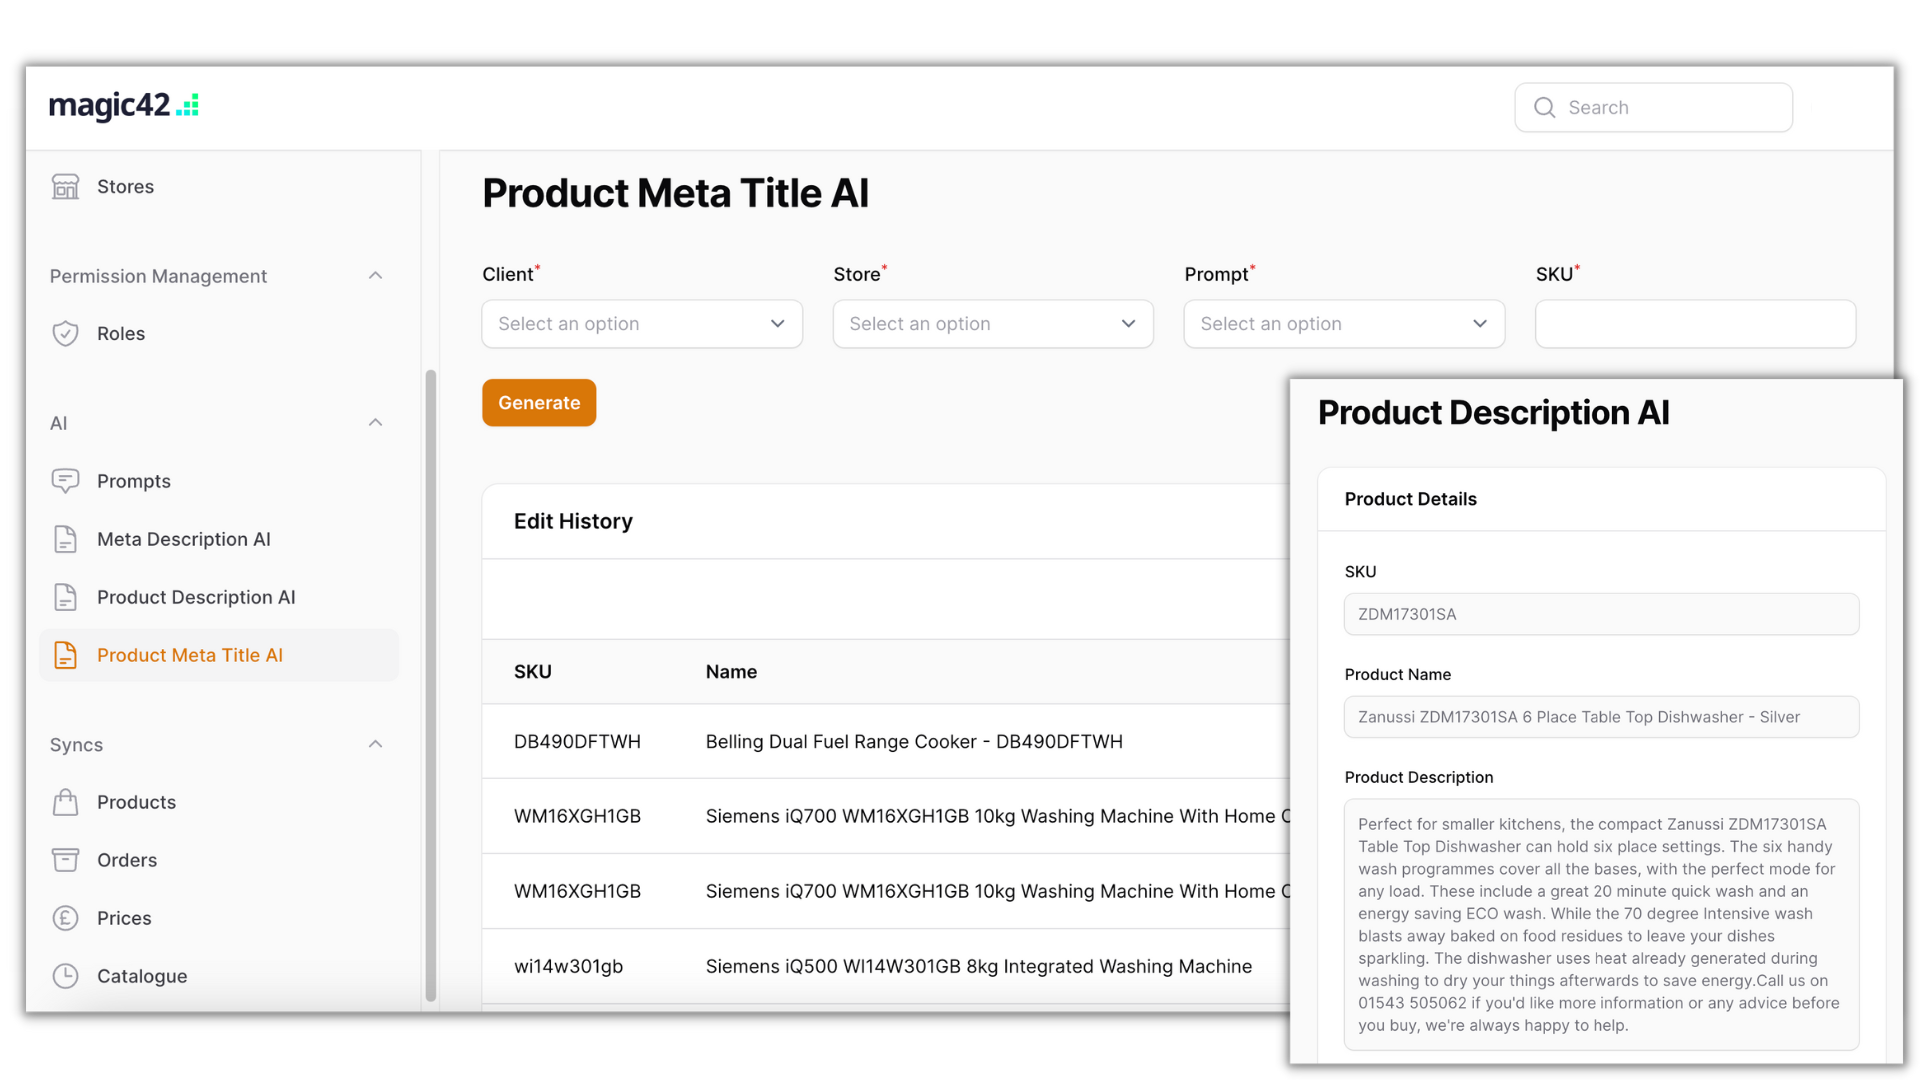 The magic42 AI tool that enhances product meta titles, product meta descriptions, product descriptions and more using AI in eCommerce